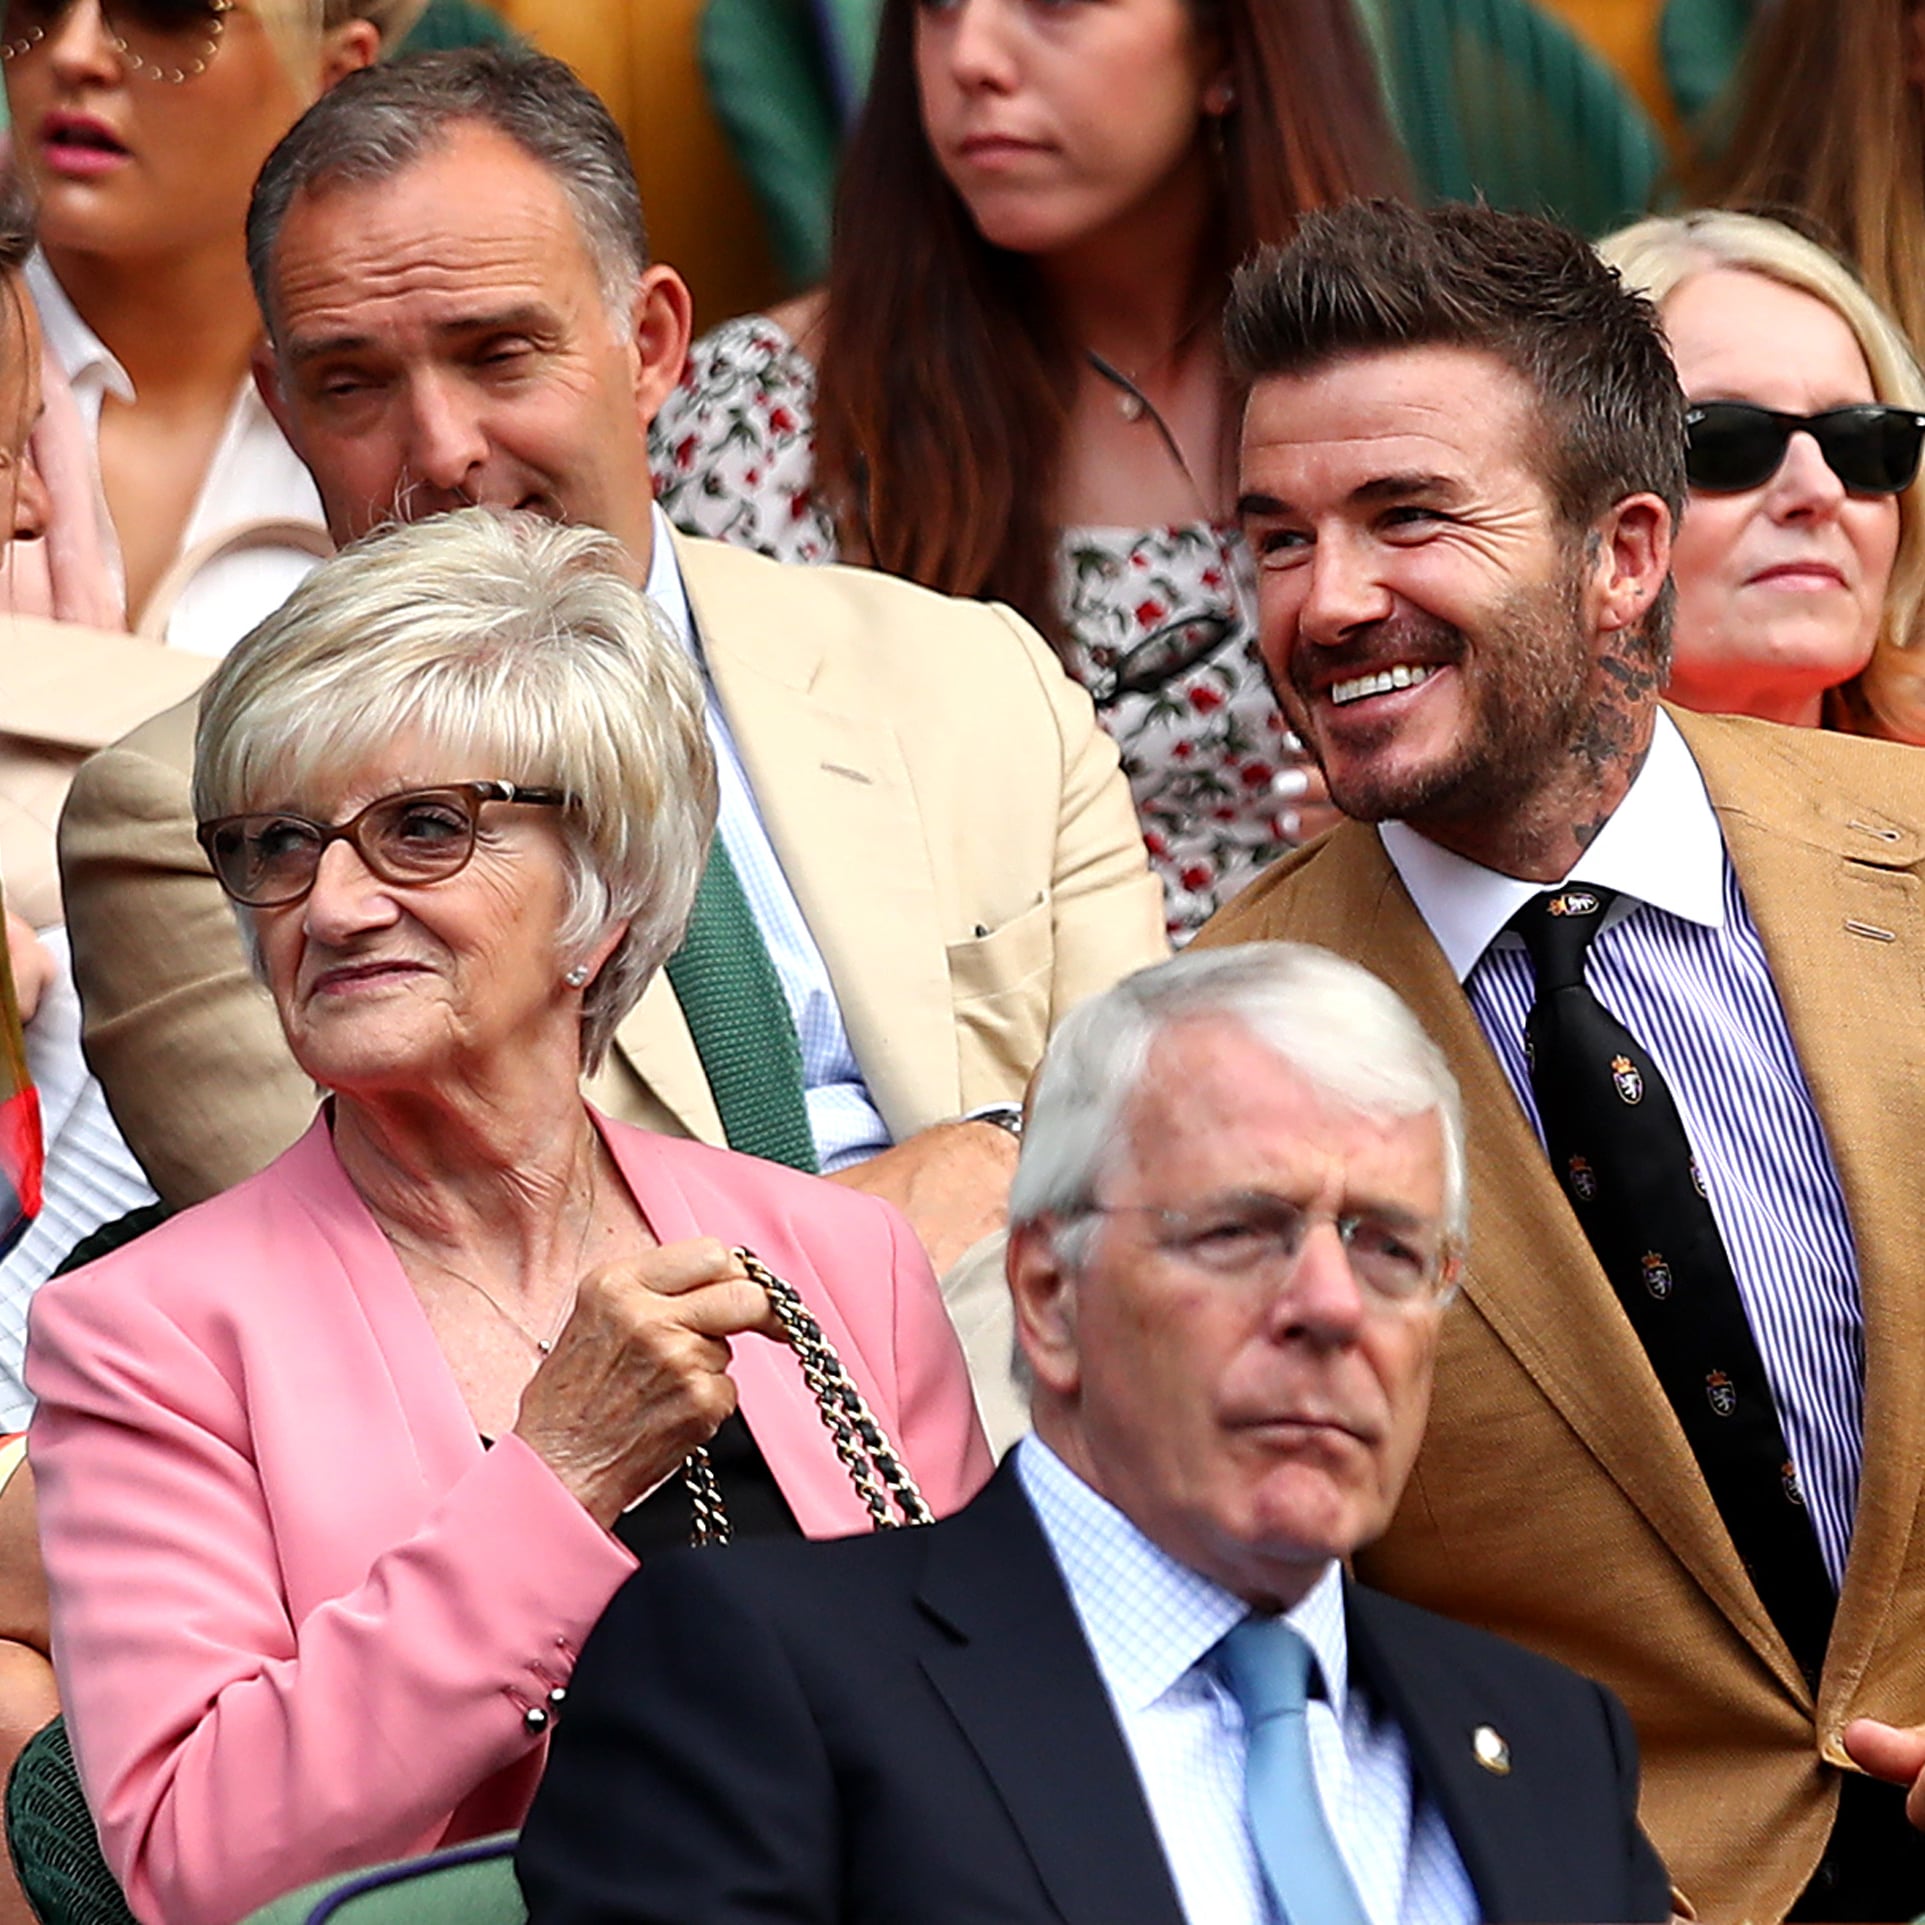 David Beckham's Wimbledon Style 2019